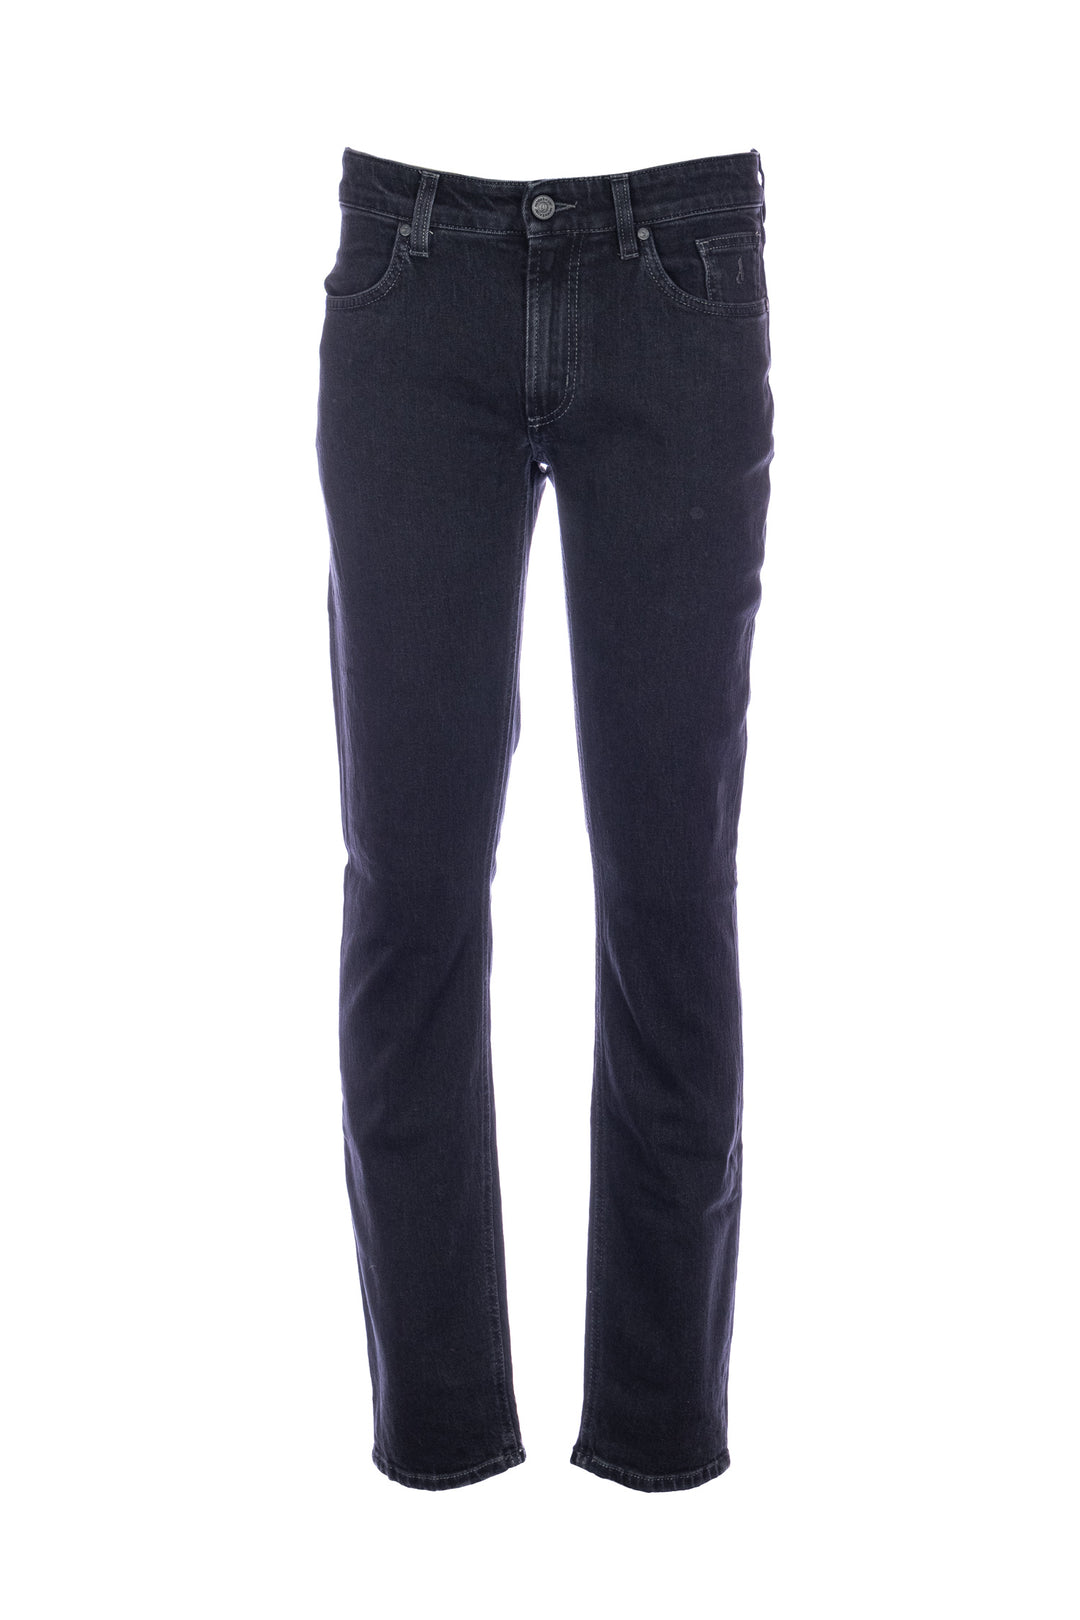 JECKERSON Jeans slim 5 tasche “JORDAN” in denim di cotone stretch nero - Mancinelli 1954